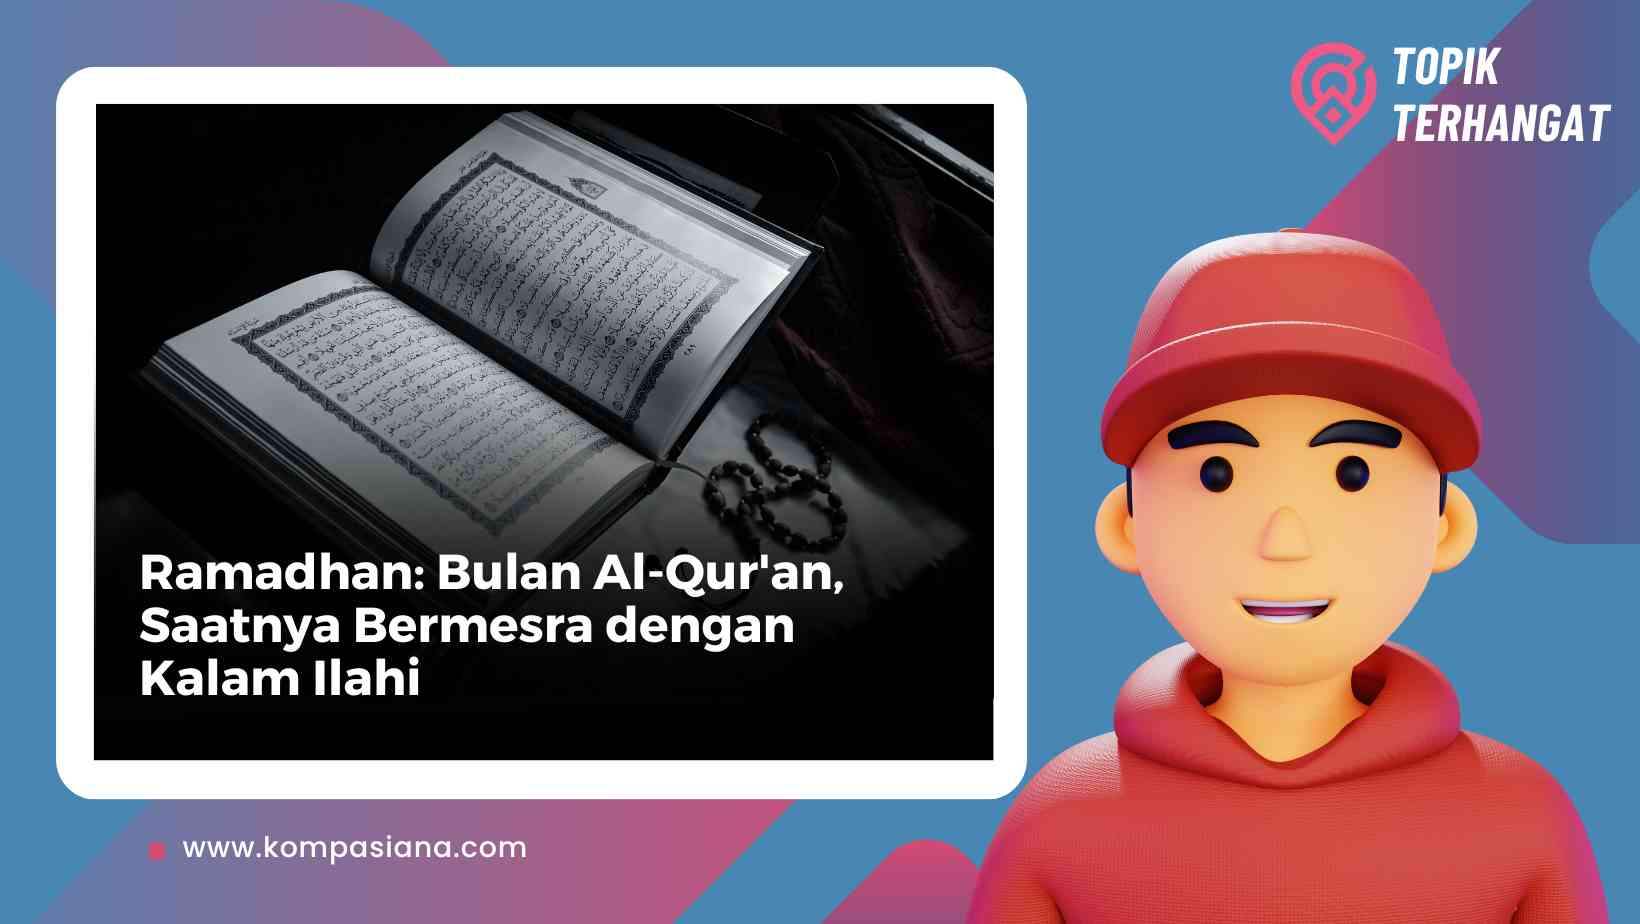 Ramadhan: Bulan Al-Qur'an, Saatnya Bermesra dengan Kalam Ilahi